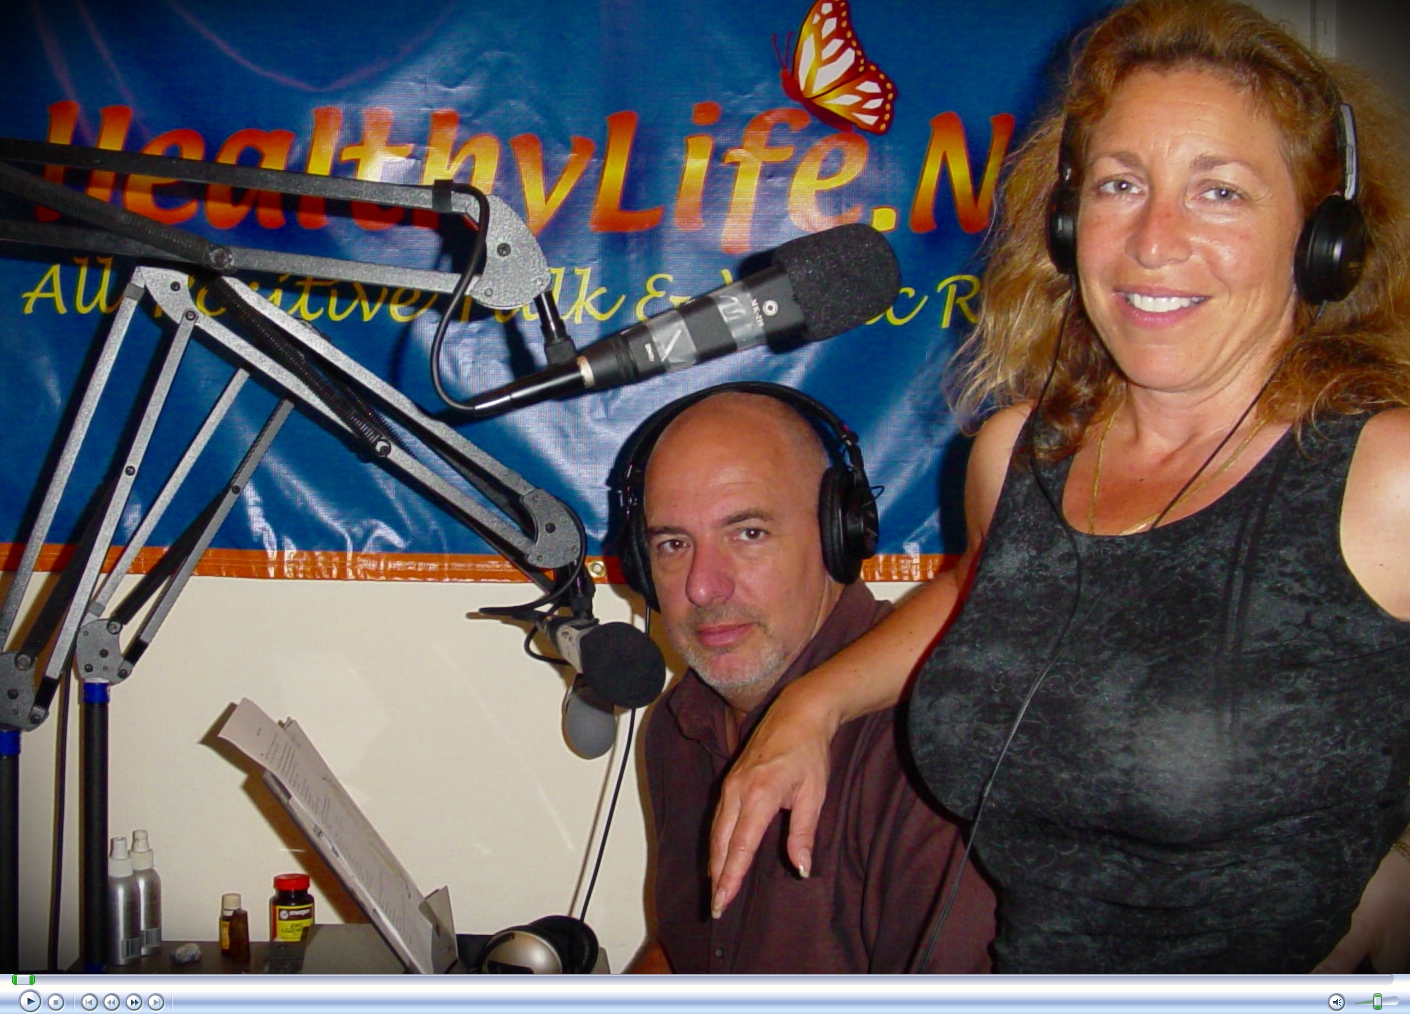 Larry Montz and Daena Smoller on HealthyLife.net (2004)